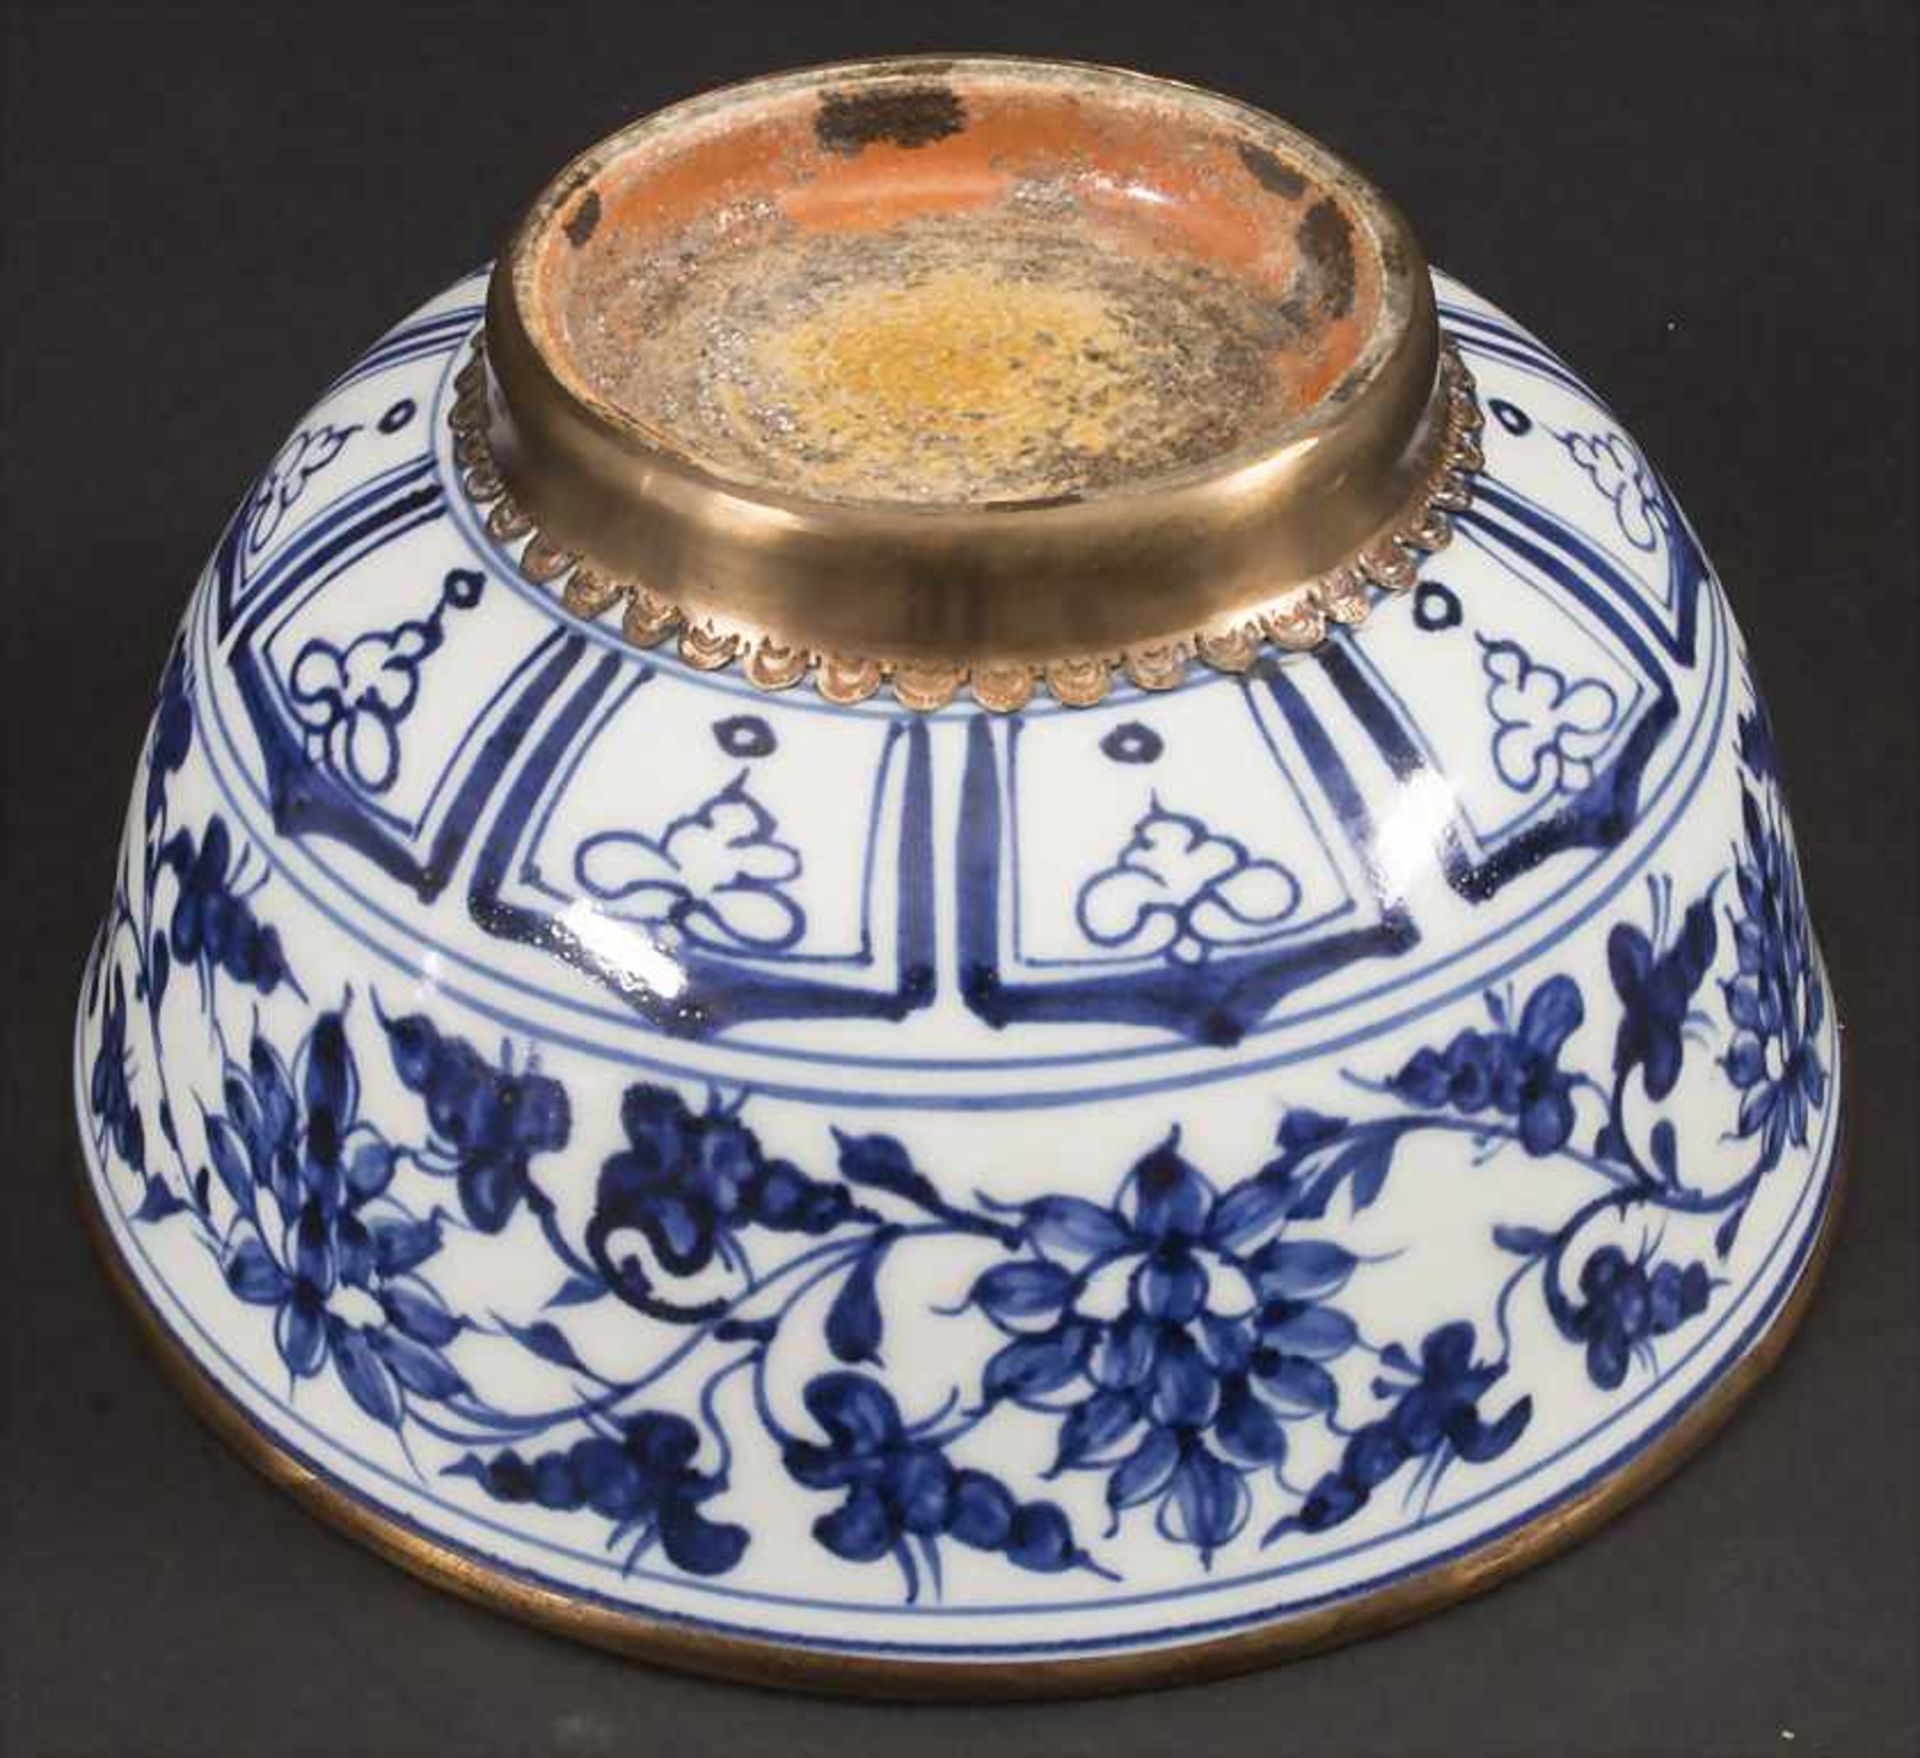 Kumme / A porcelain bowl, China, Ming-Stil, wohl späte Qing-Dynastie (1644-1911) - Image 4 of 5